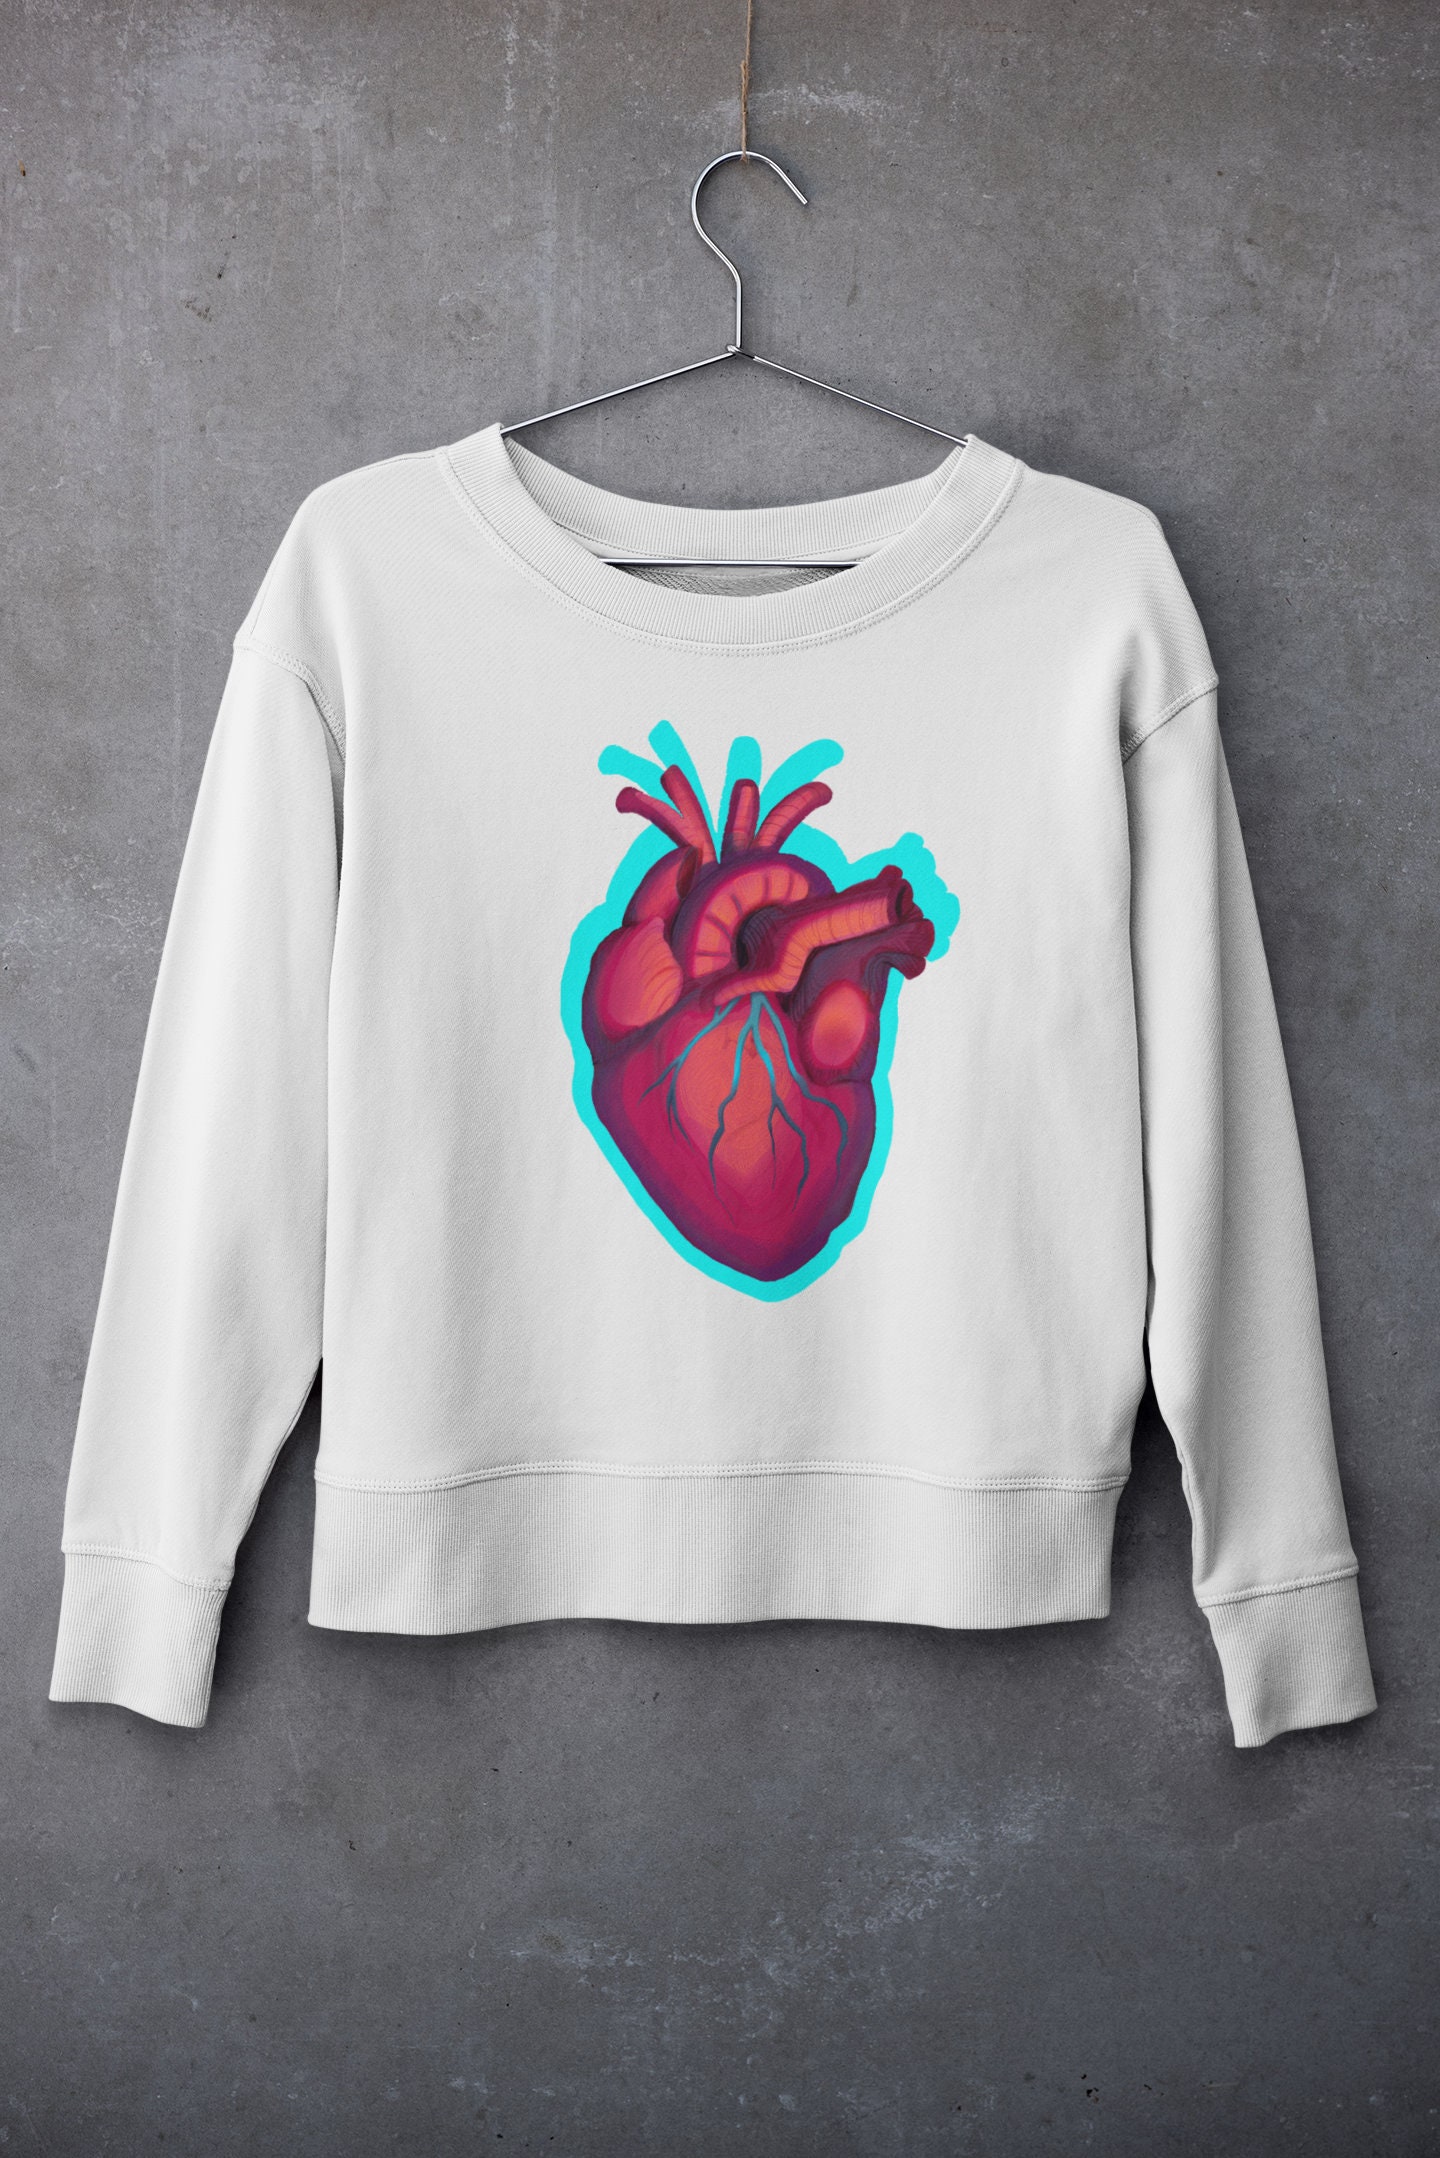 Black heart sweater anatomical heart shirt Human Heart | Etsy